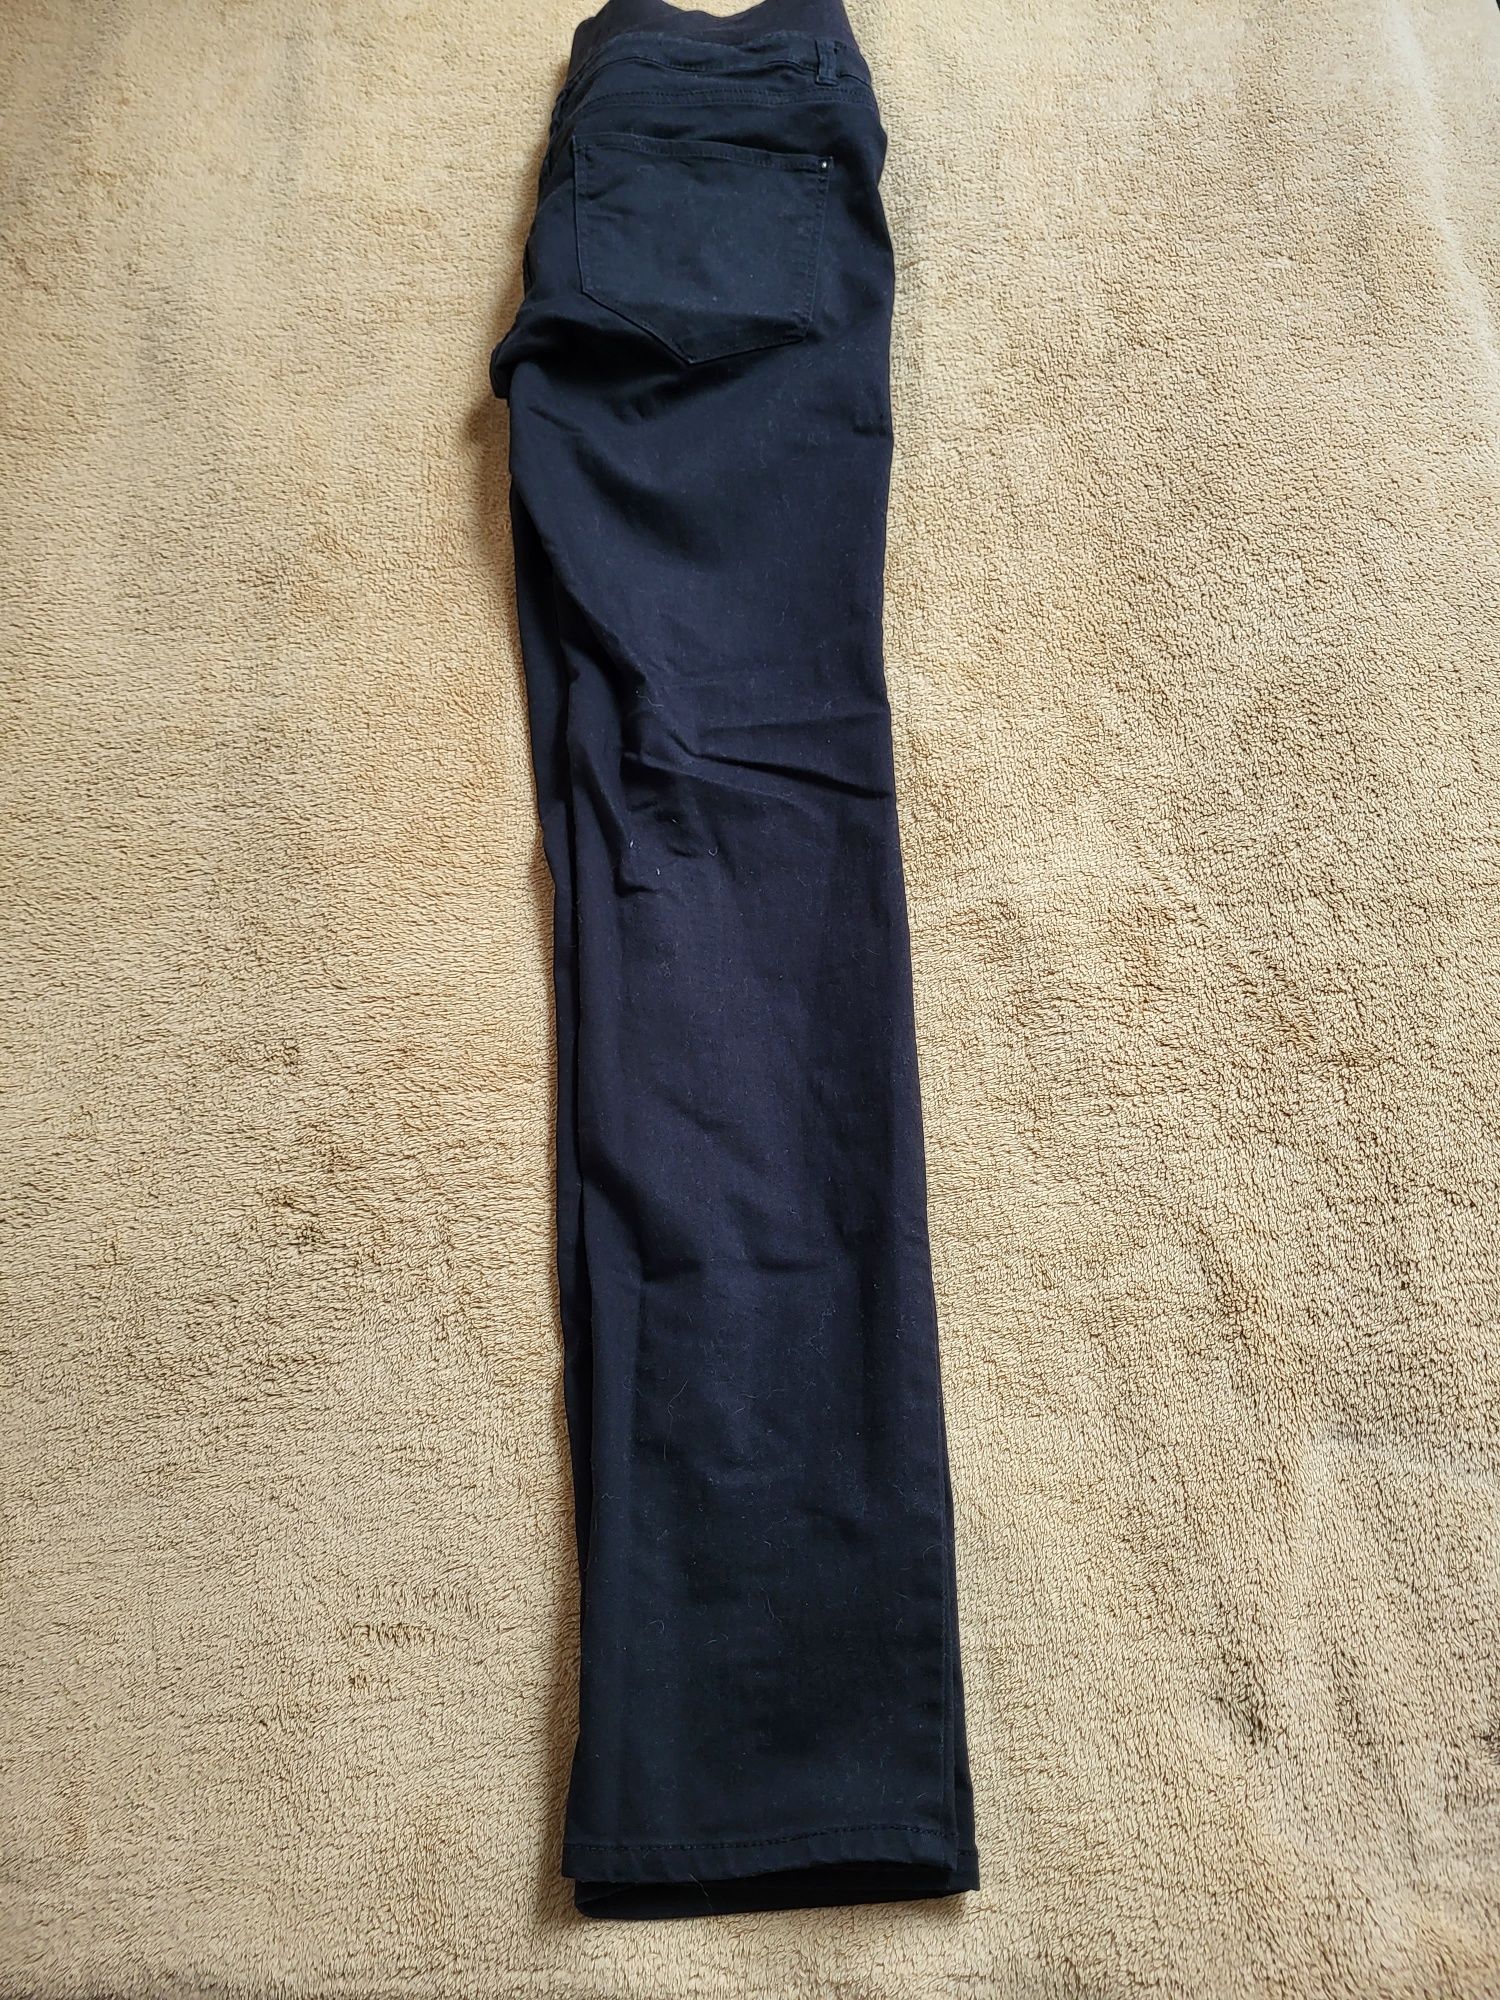 Spodnie ciazowe HM mama rozmiar 40 czarne